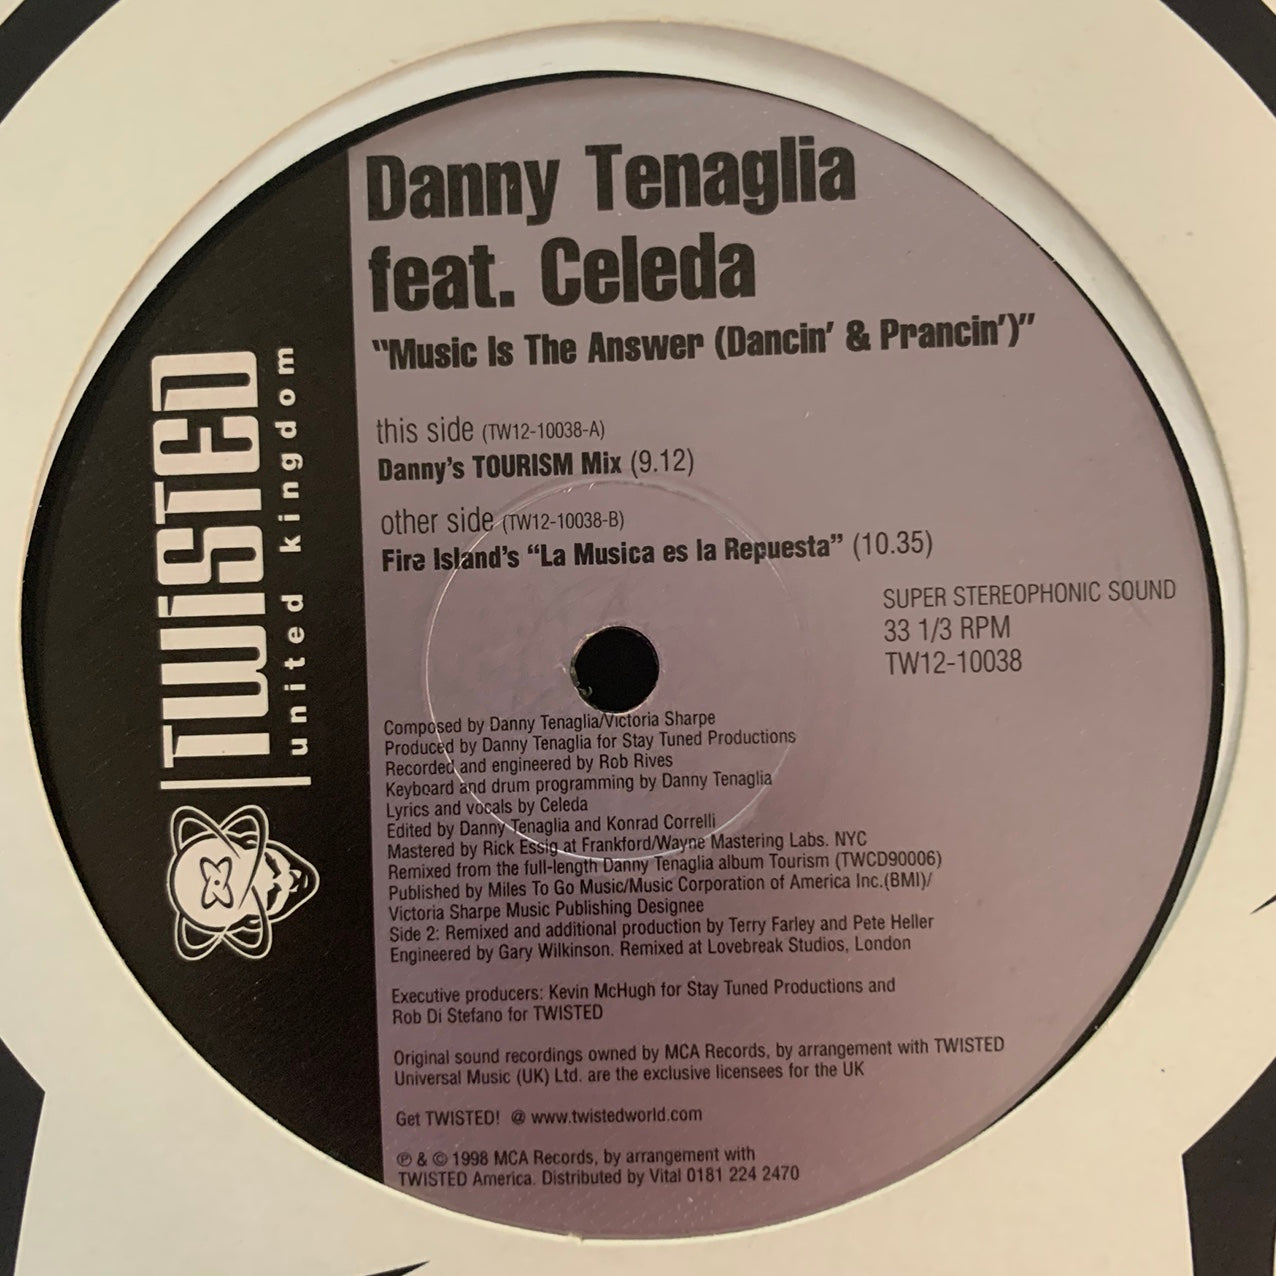 Danny Tenaglia Feat Celeda “Music Is The Answer” 2 Track 12inch Vinyl